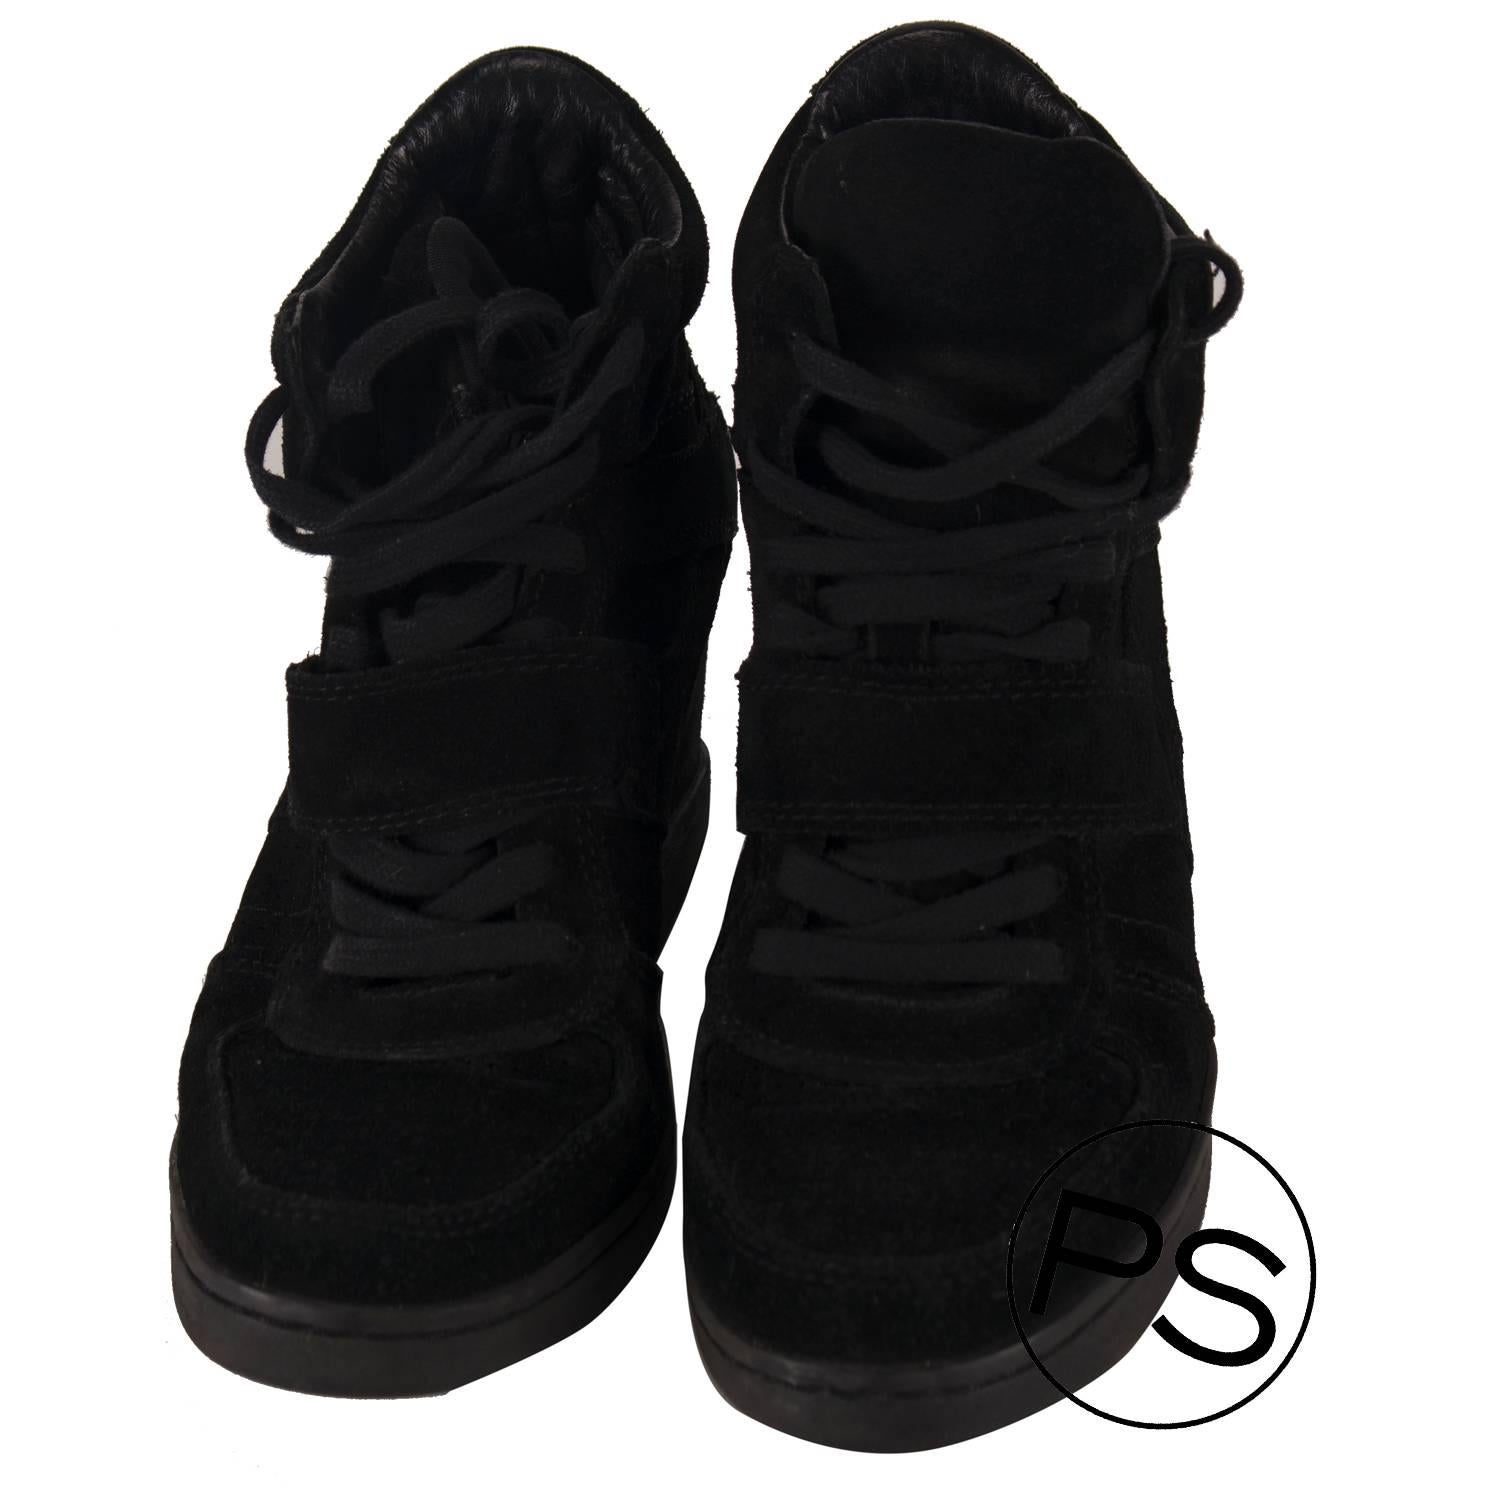 Women's Ash Wedge shoes 38 Suede Black 2012.